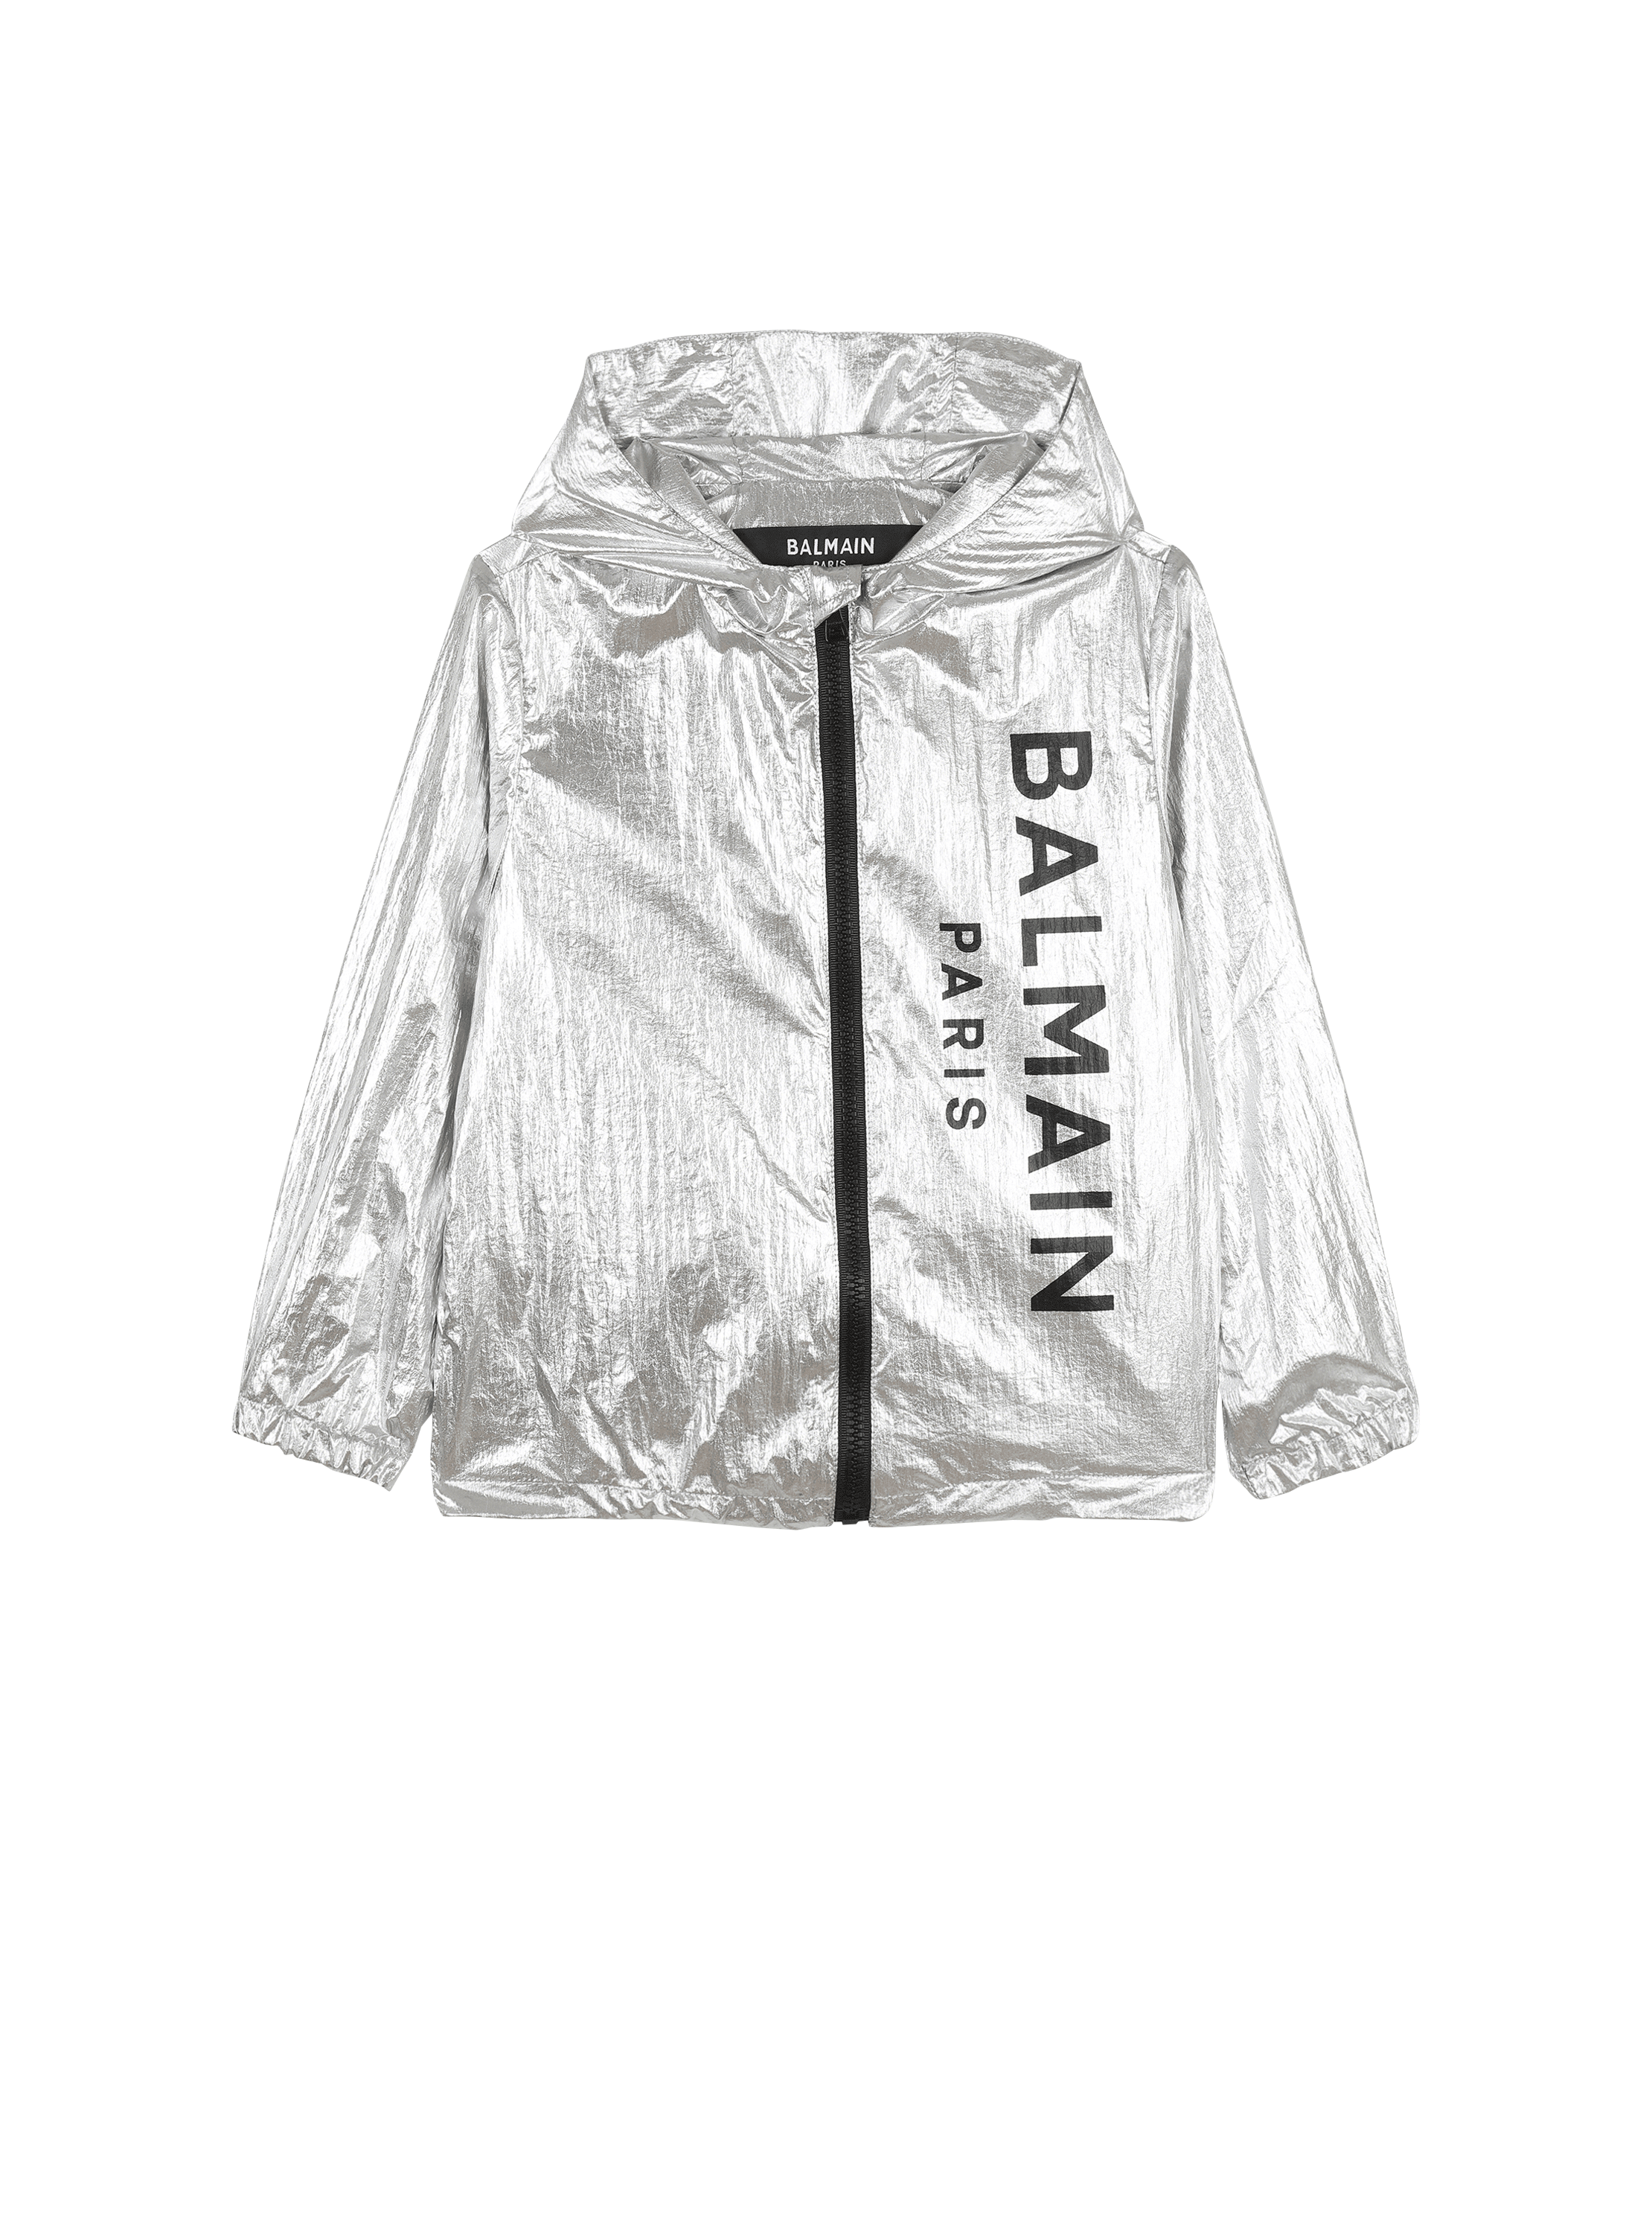 Hooded jacket with Balmain logo